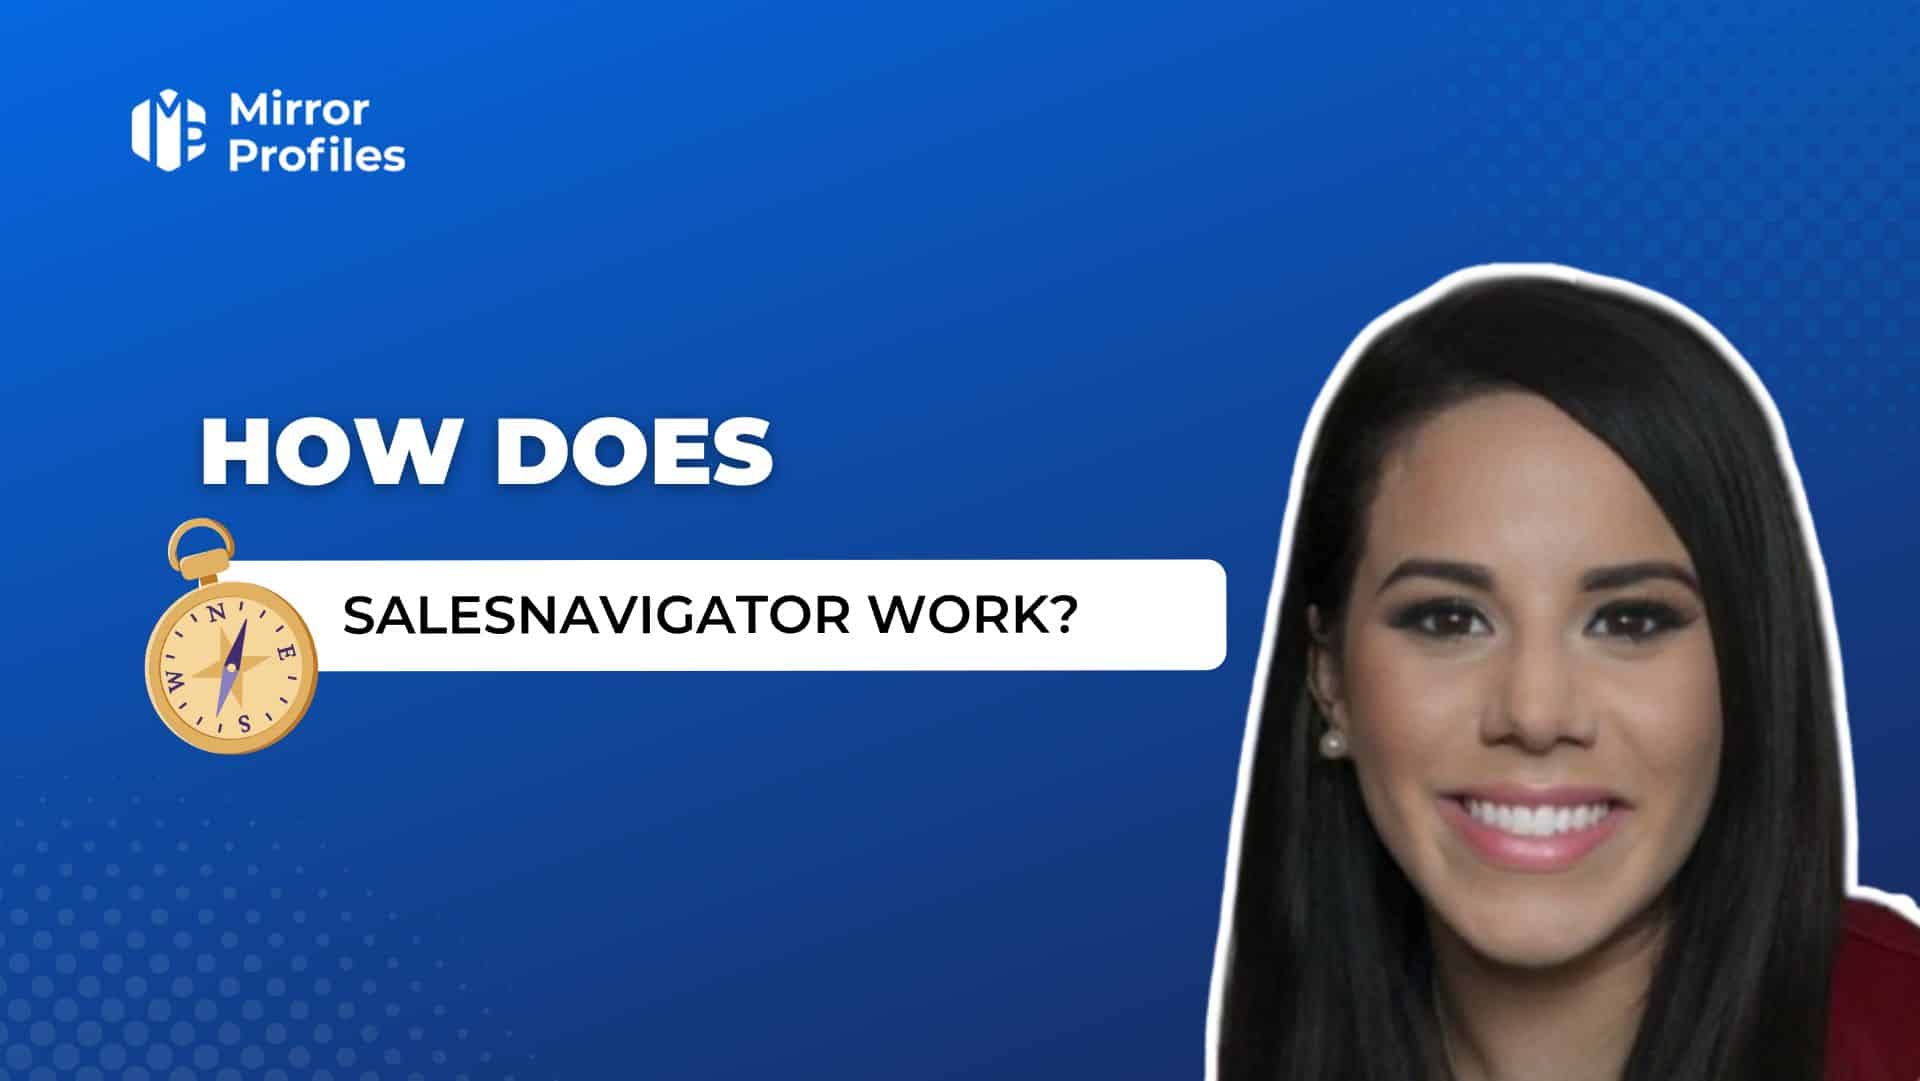 How does salesnavigator work?